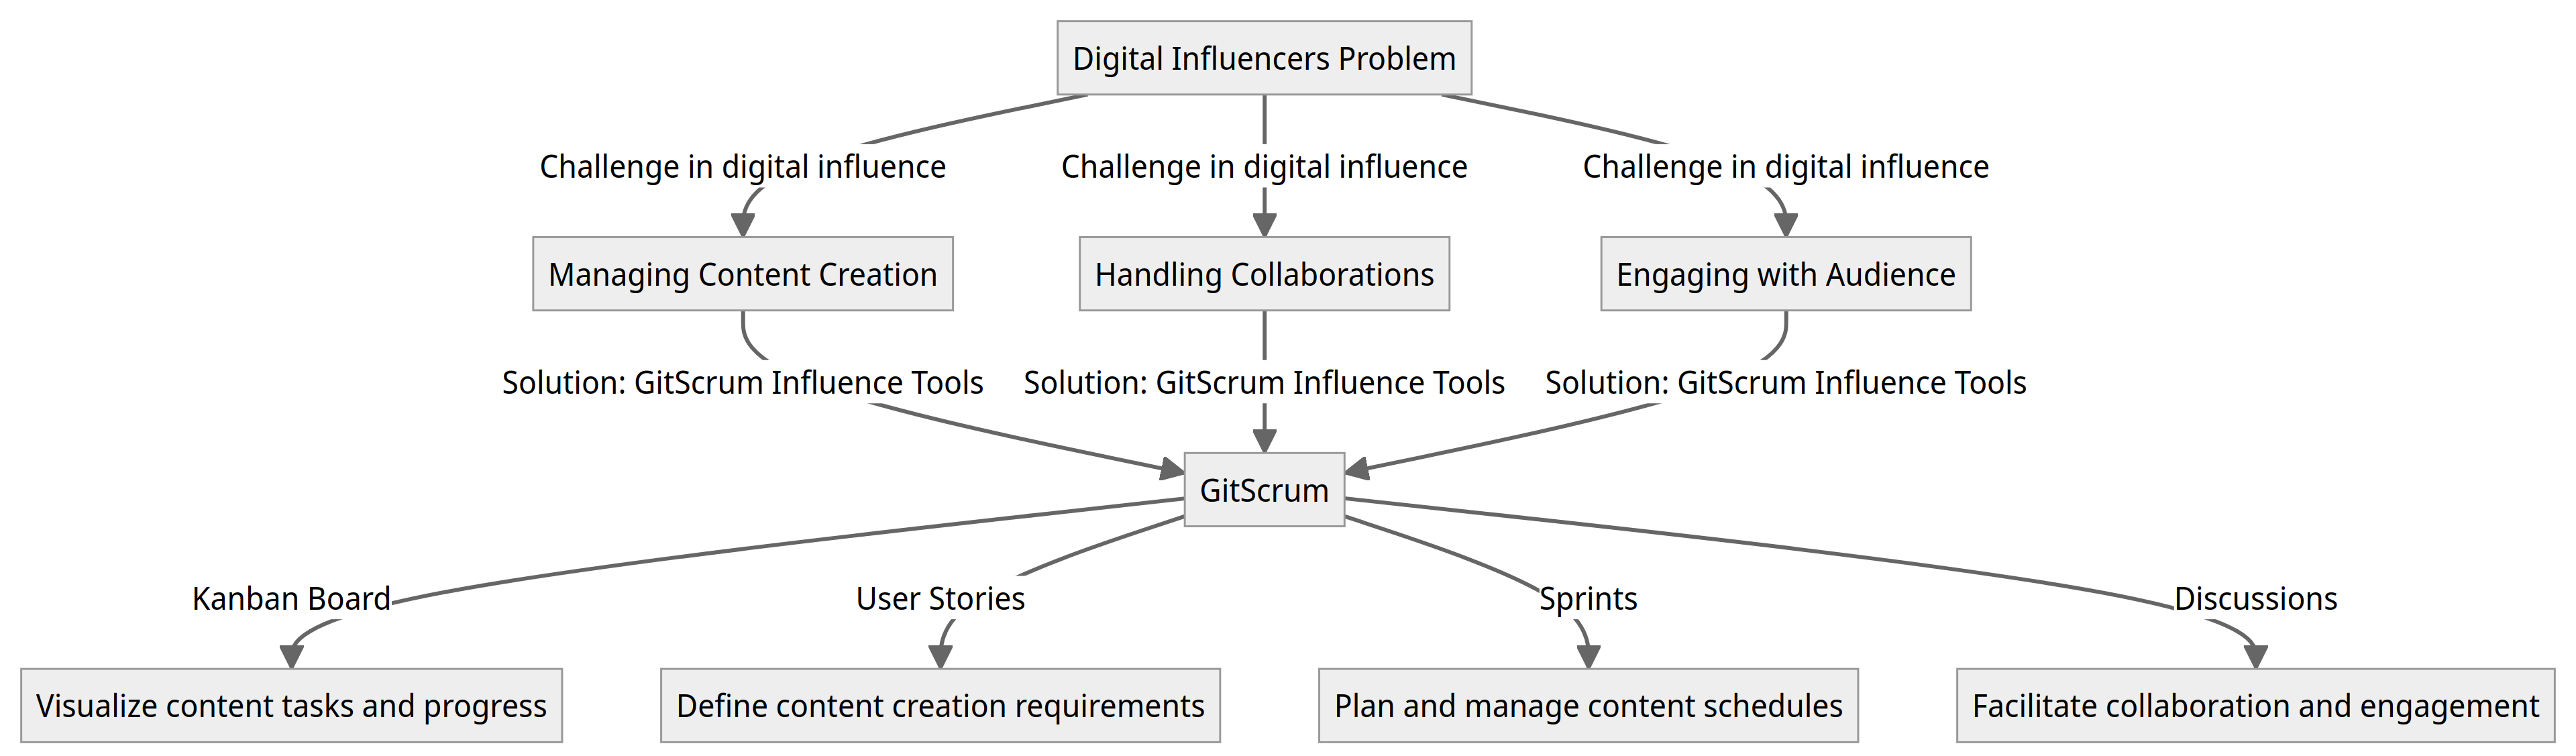 Diagram - Digital Influencers